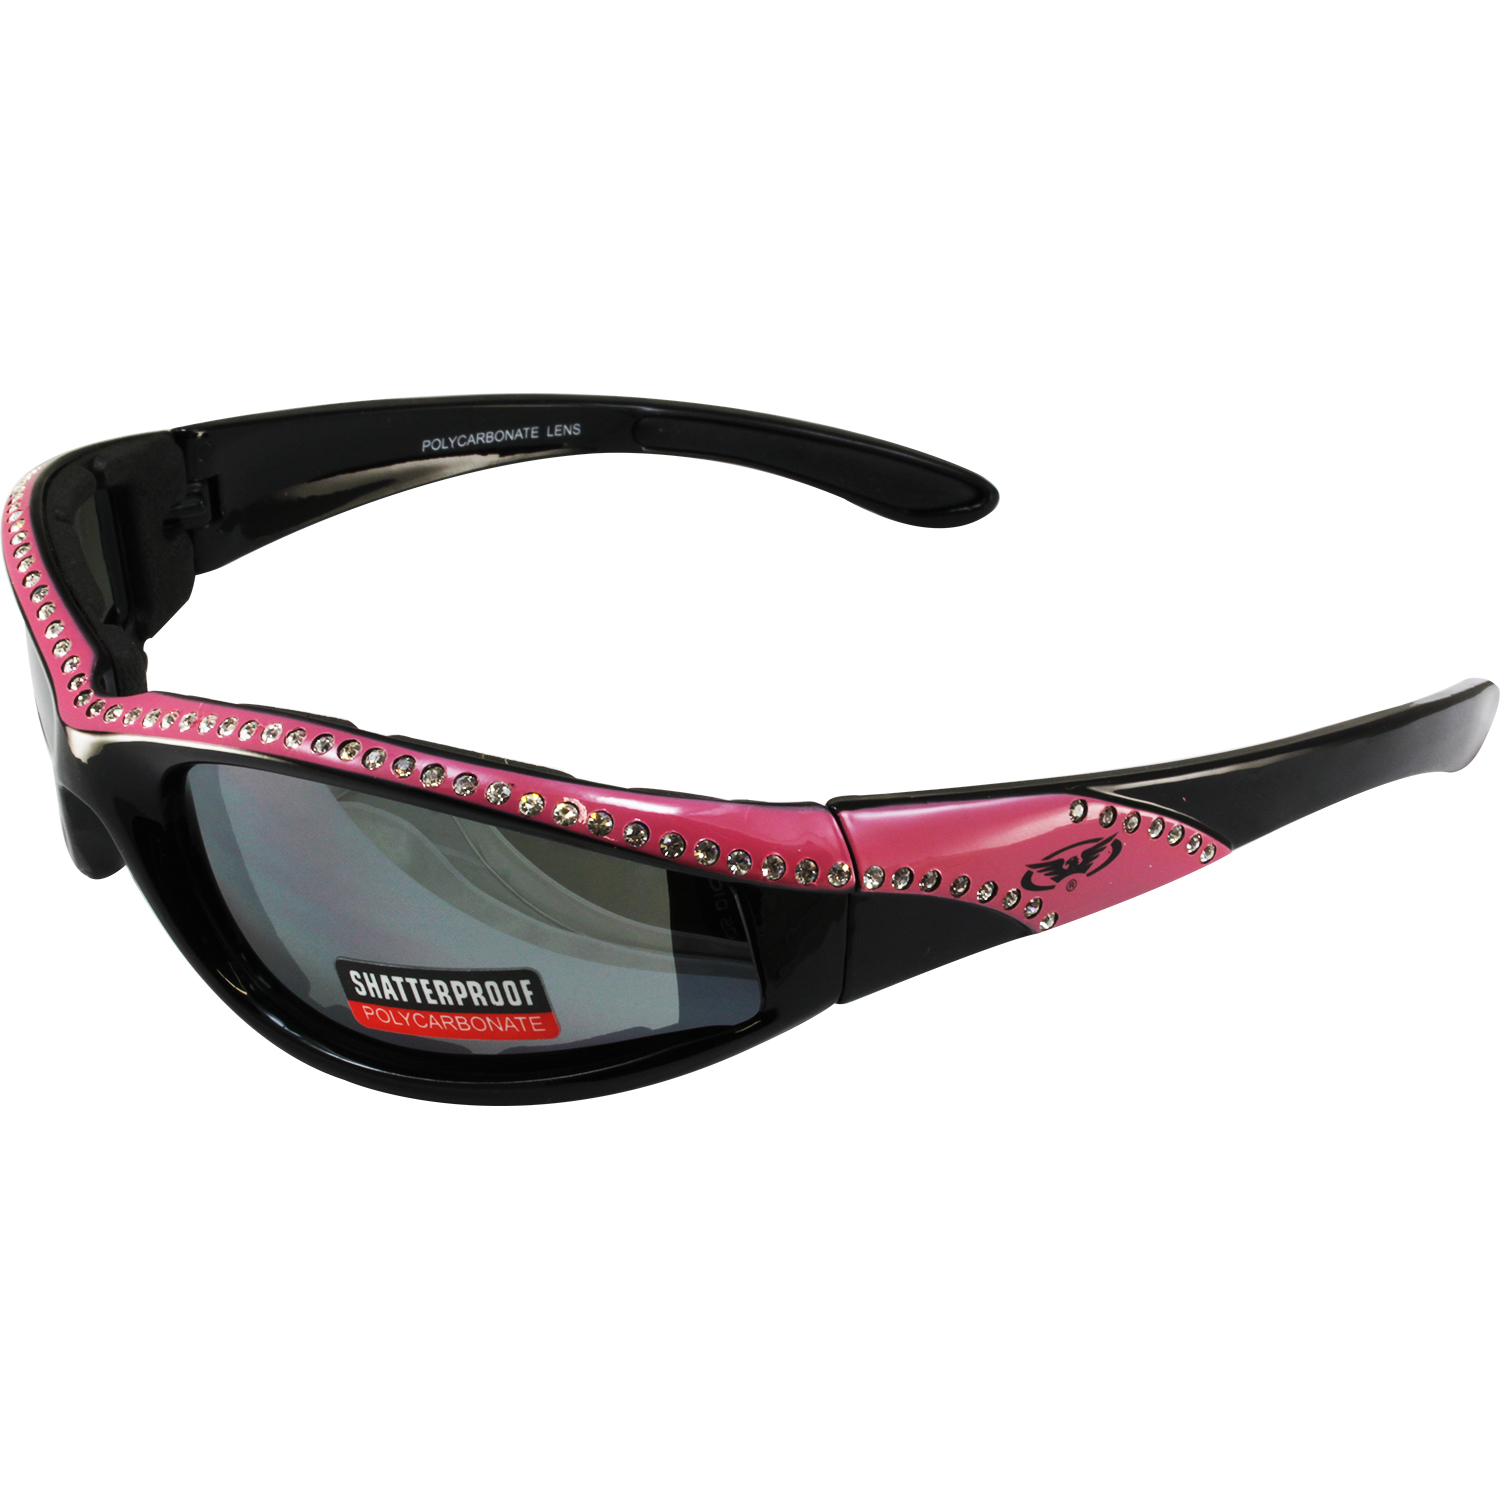 2 Pairs of Global Vision Eyewear Marilyn 11 Women's Black Sunglasses Pink + Orange Stripe Frames Flash Mirror Lenses - image 3 of 9